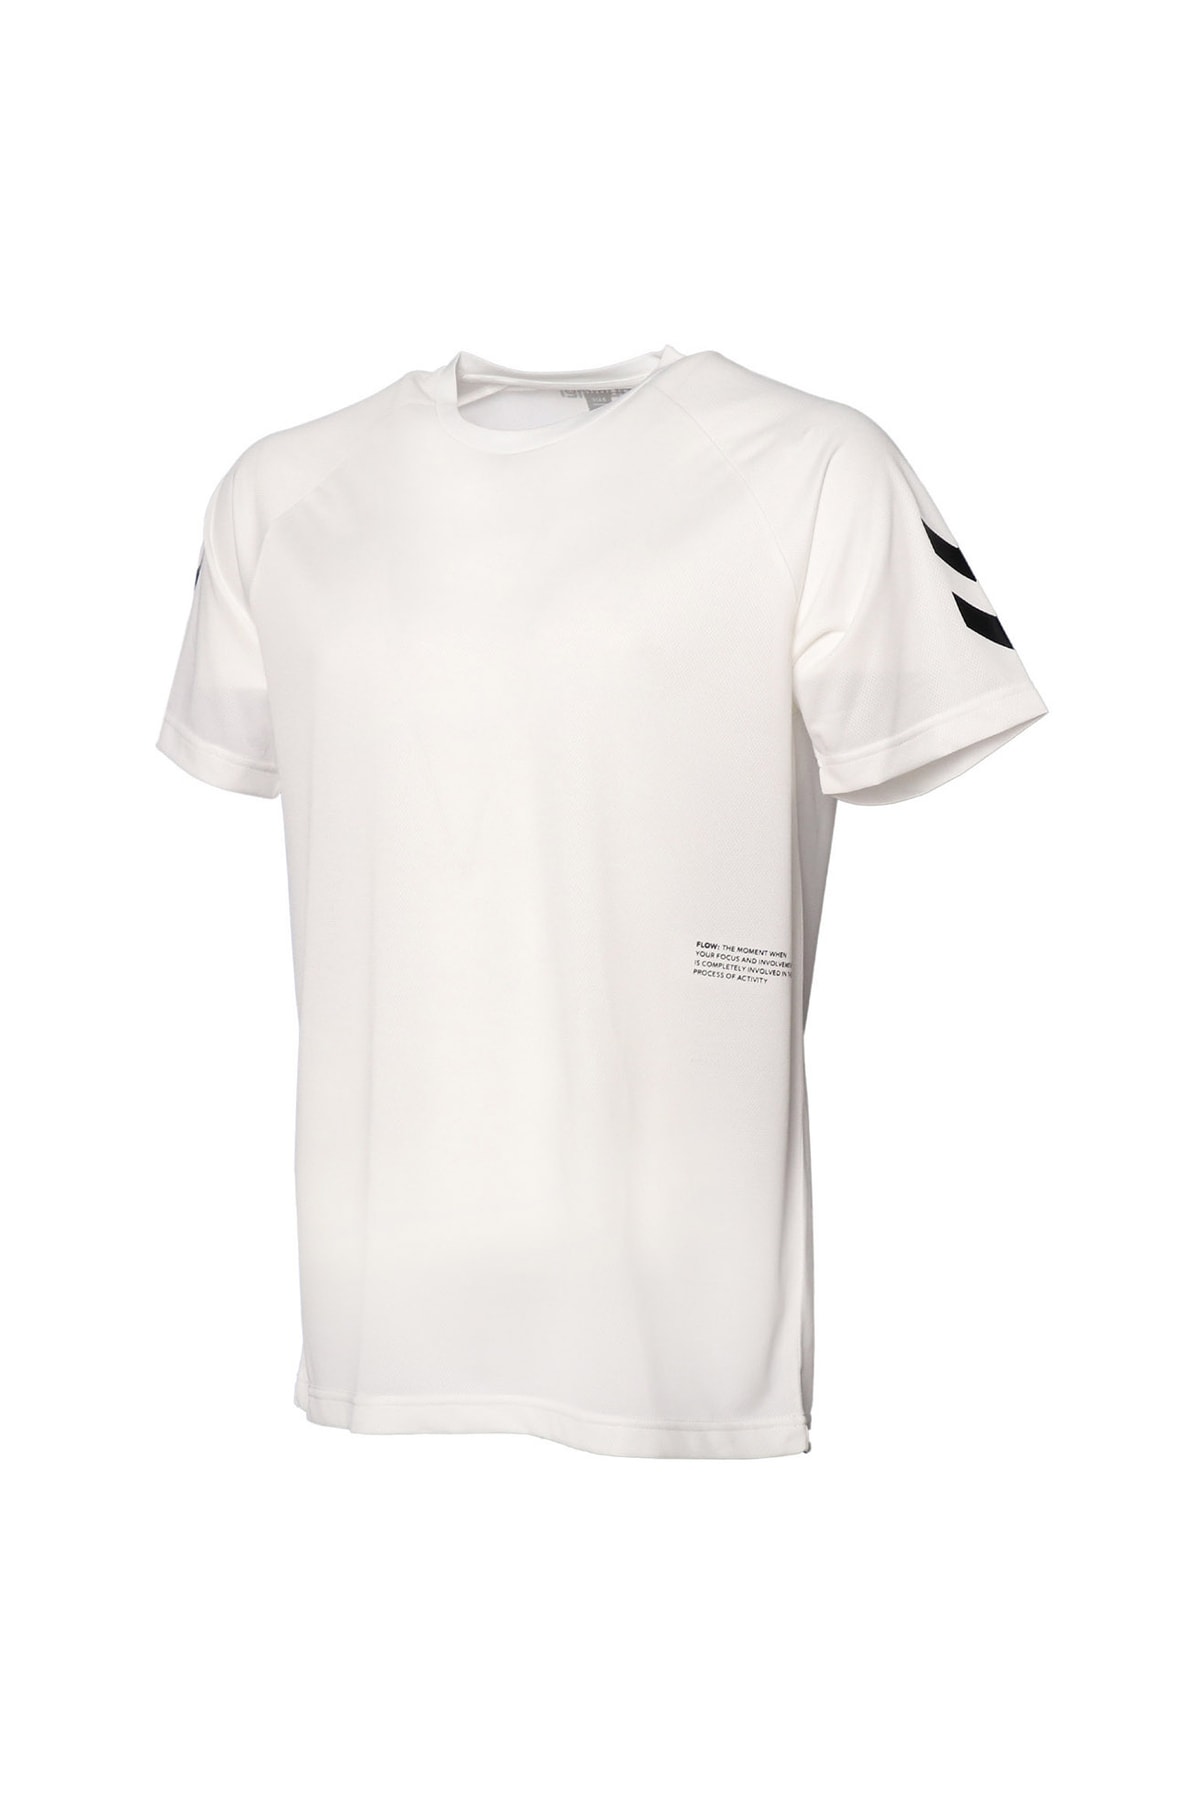 HUMMEL تی شرت مردانه با چاپ یقه مایل به سفید Hmlt-mt پاپیون M